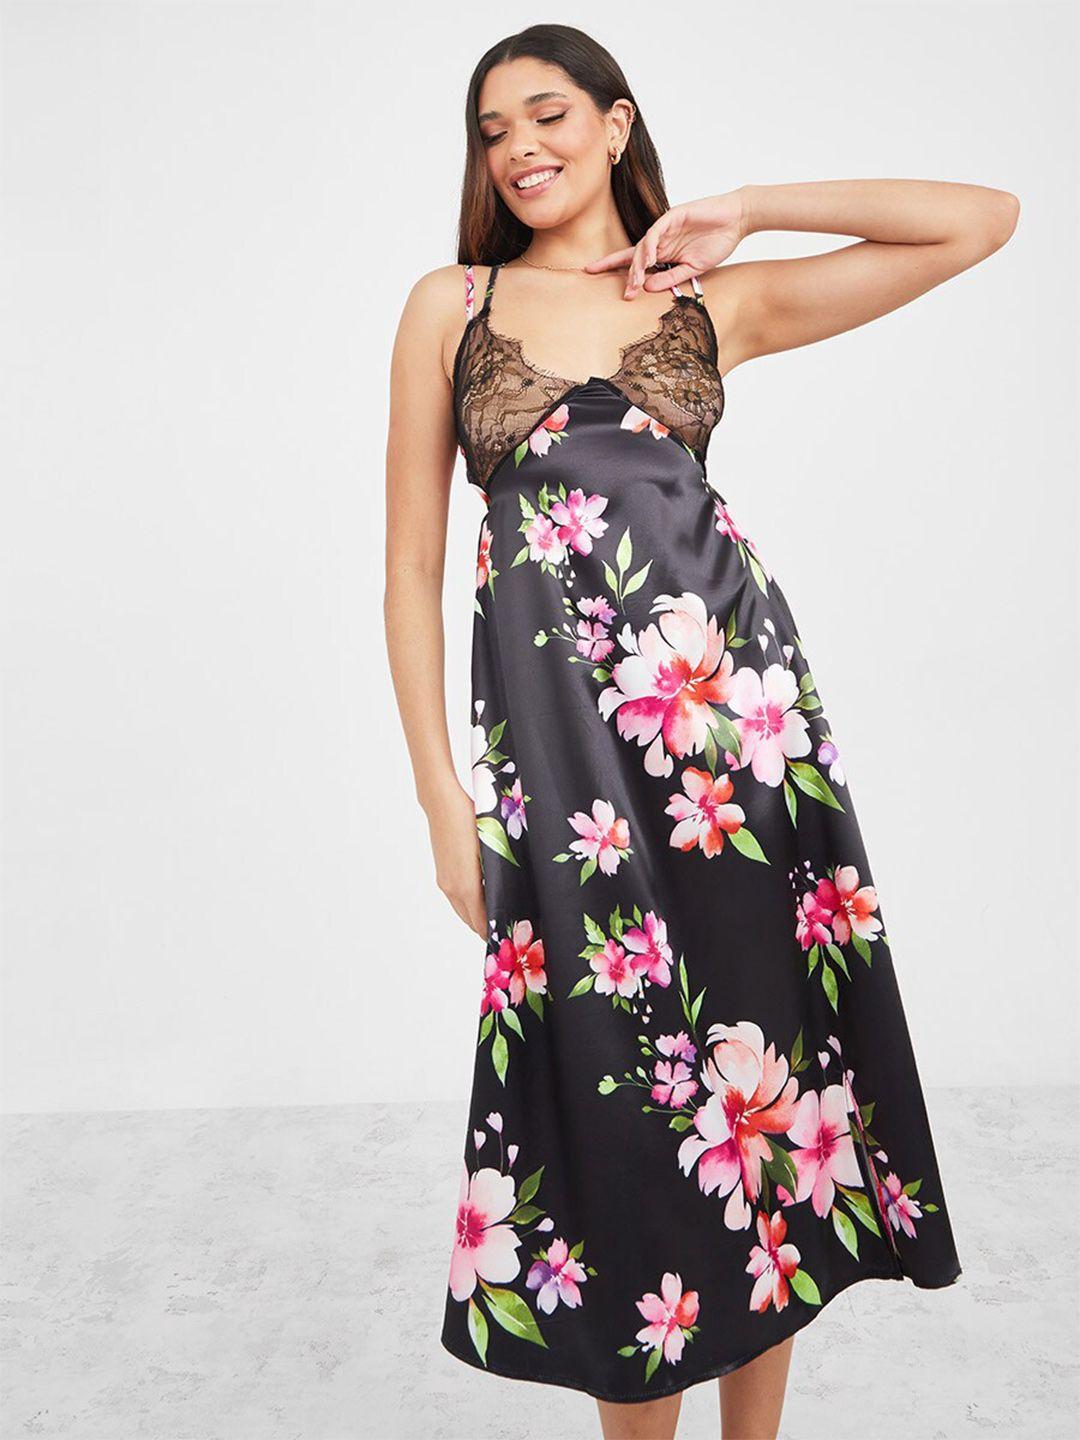 styli-black-floral-printed-nightdress